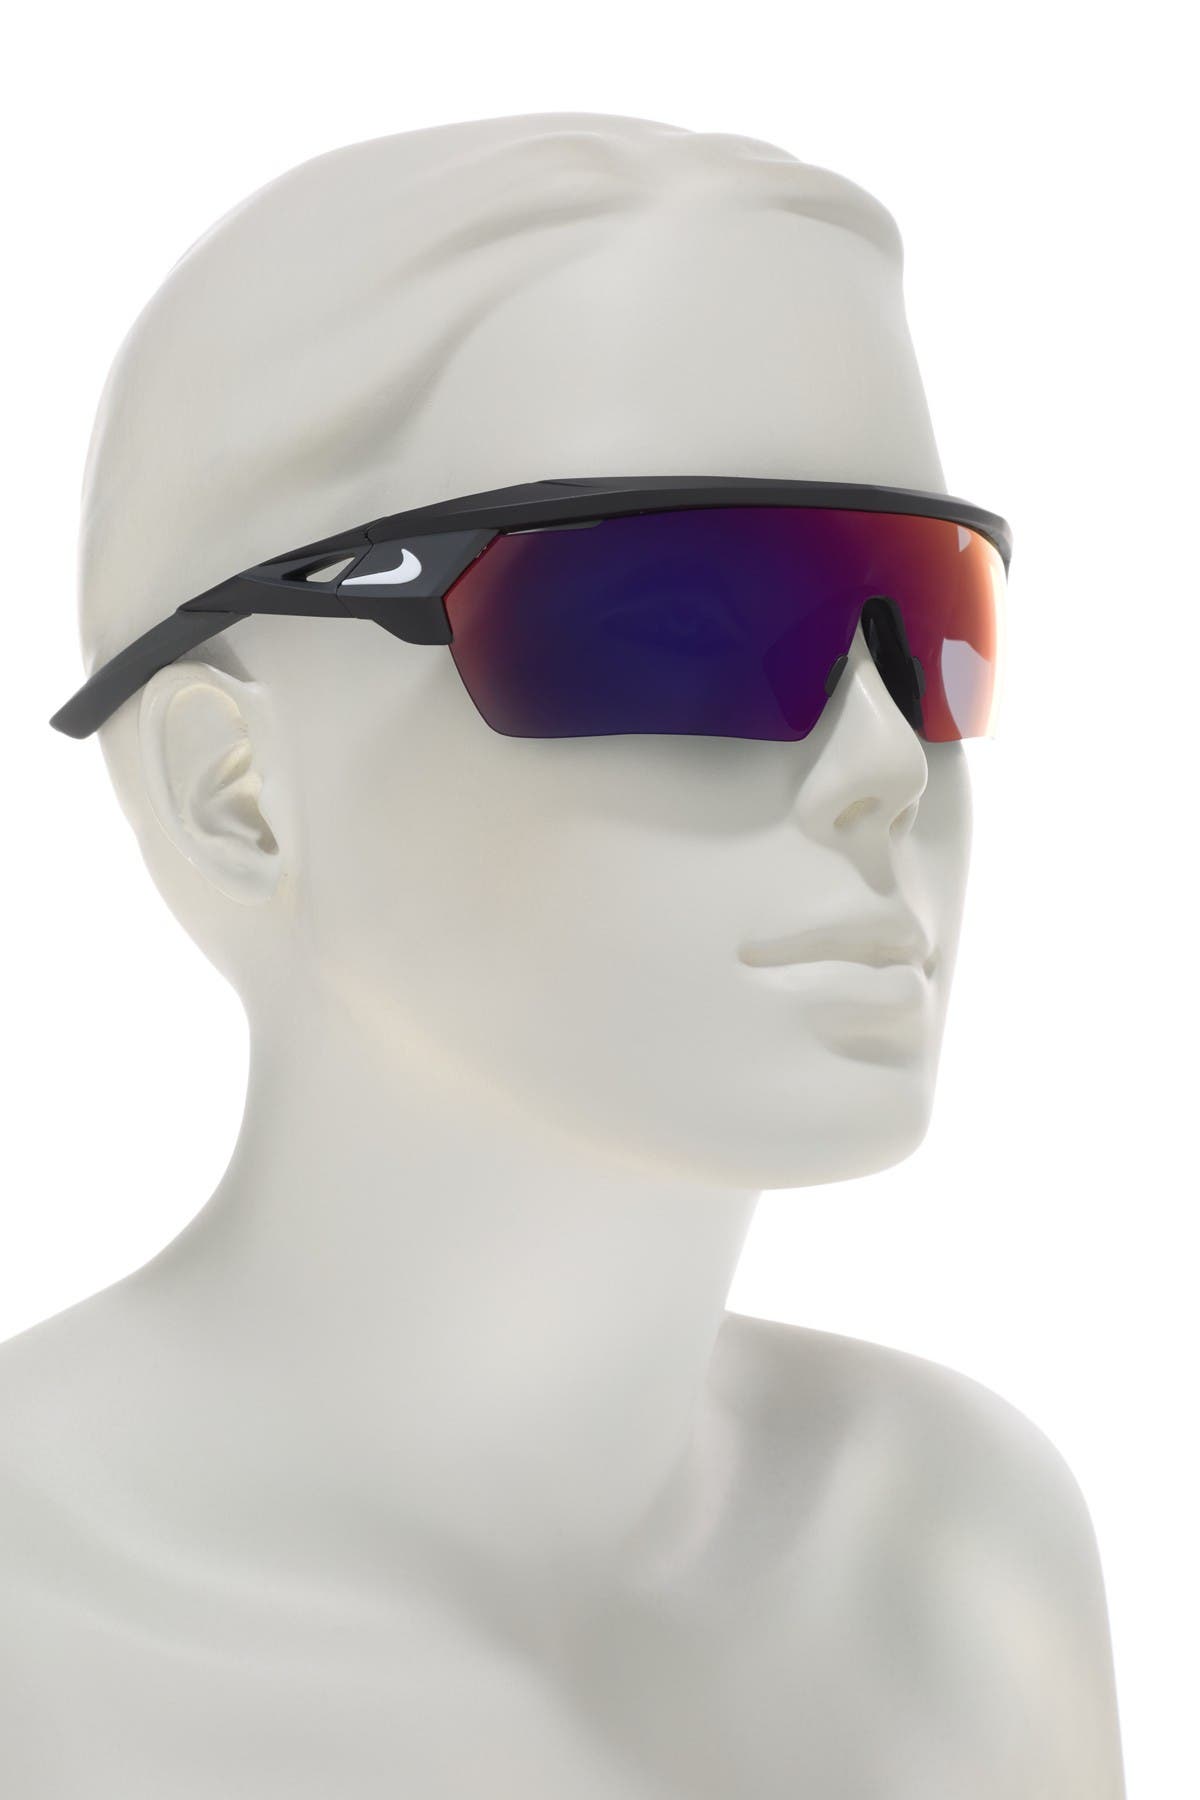 nike hyperforce elite sunglasses